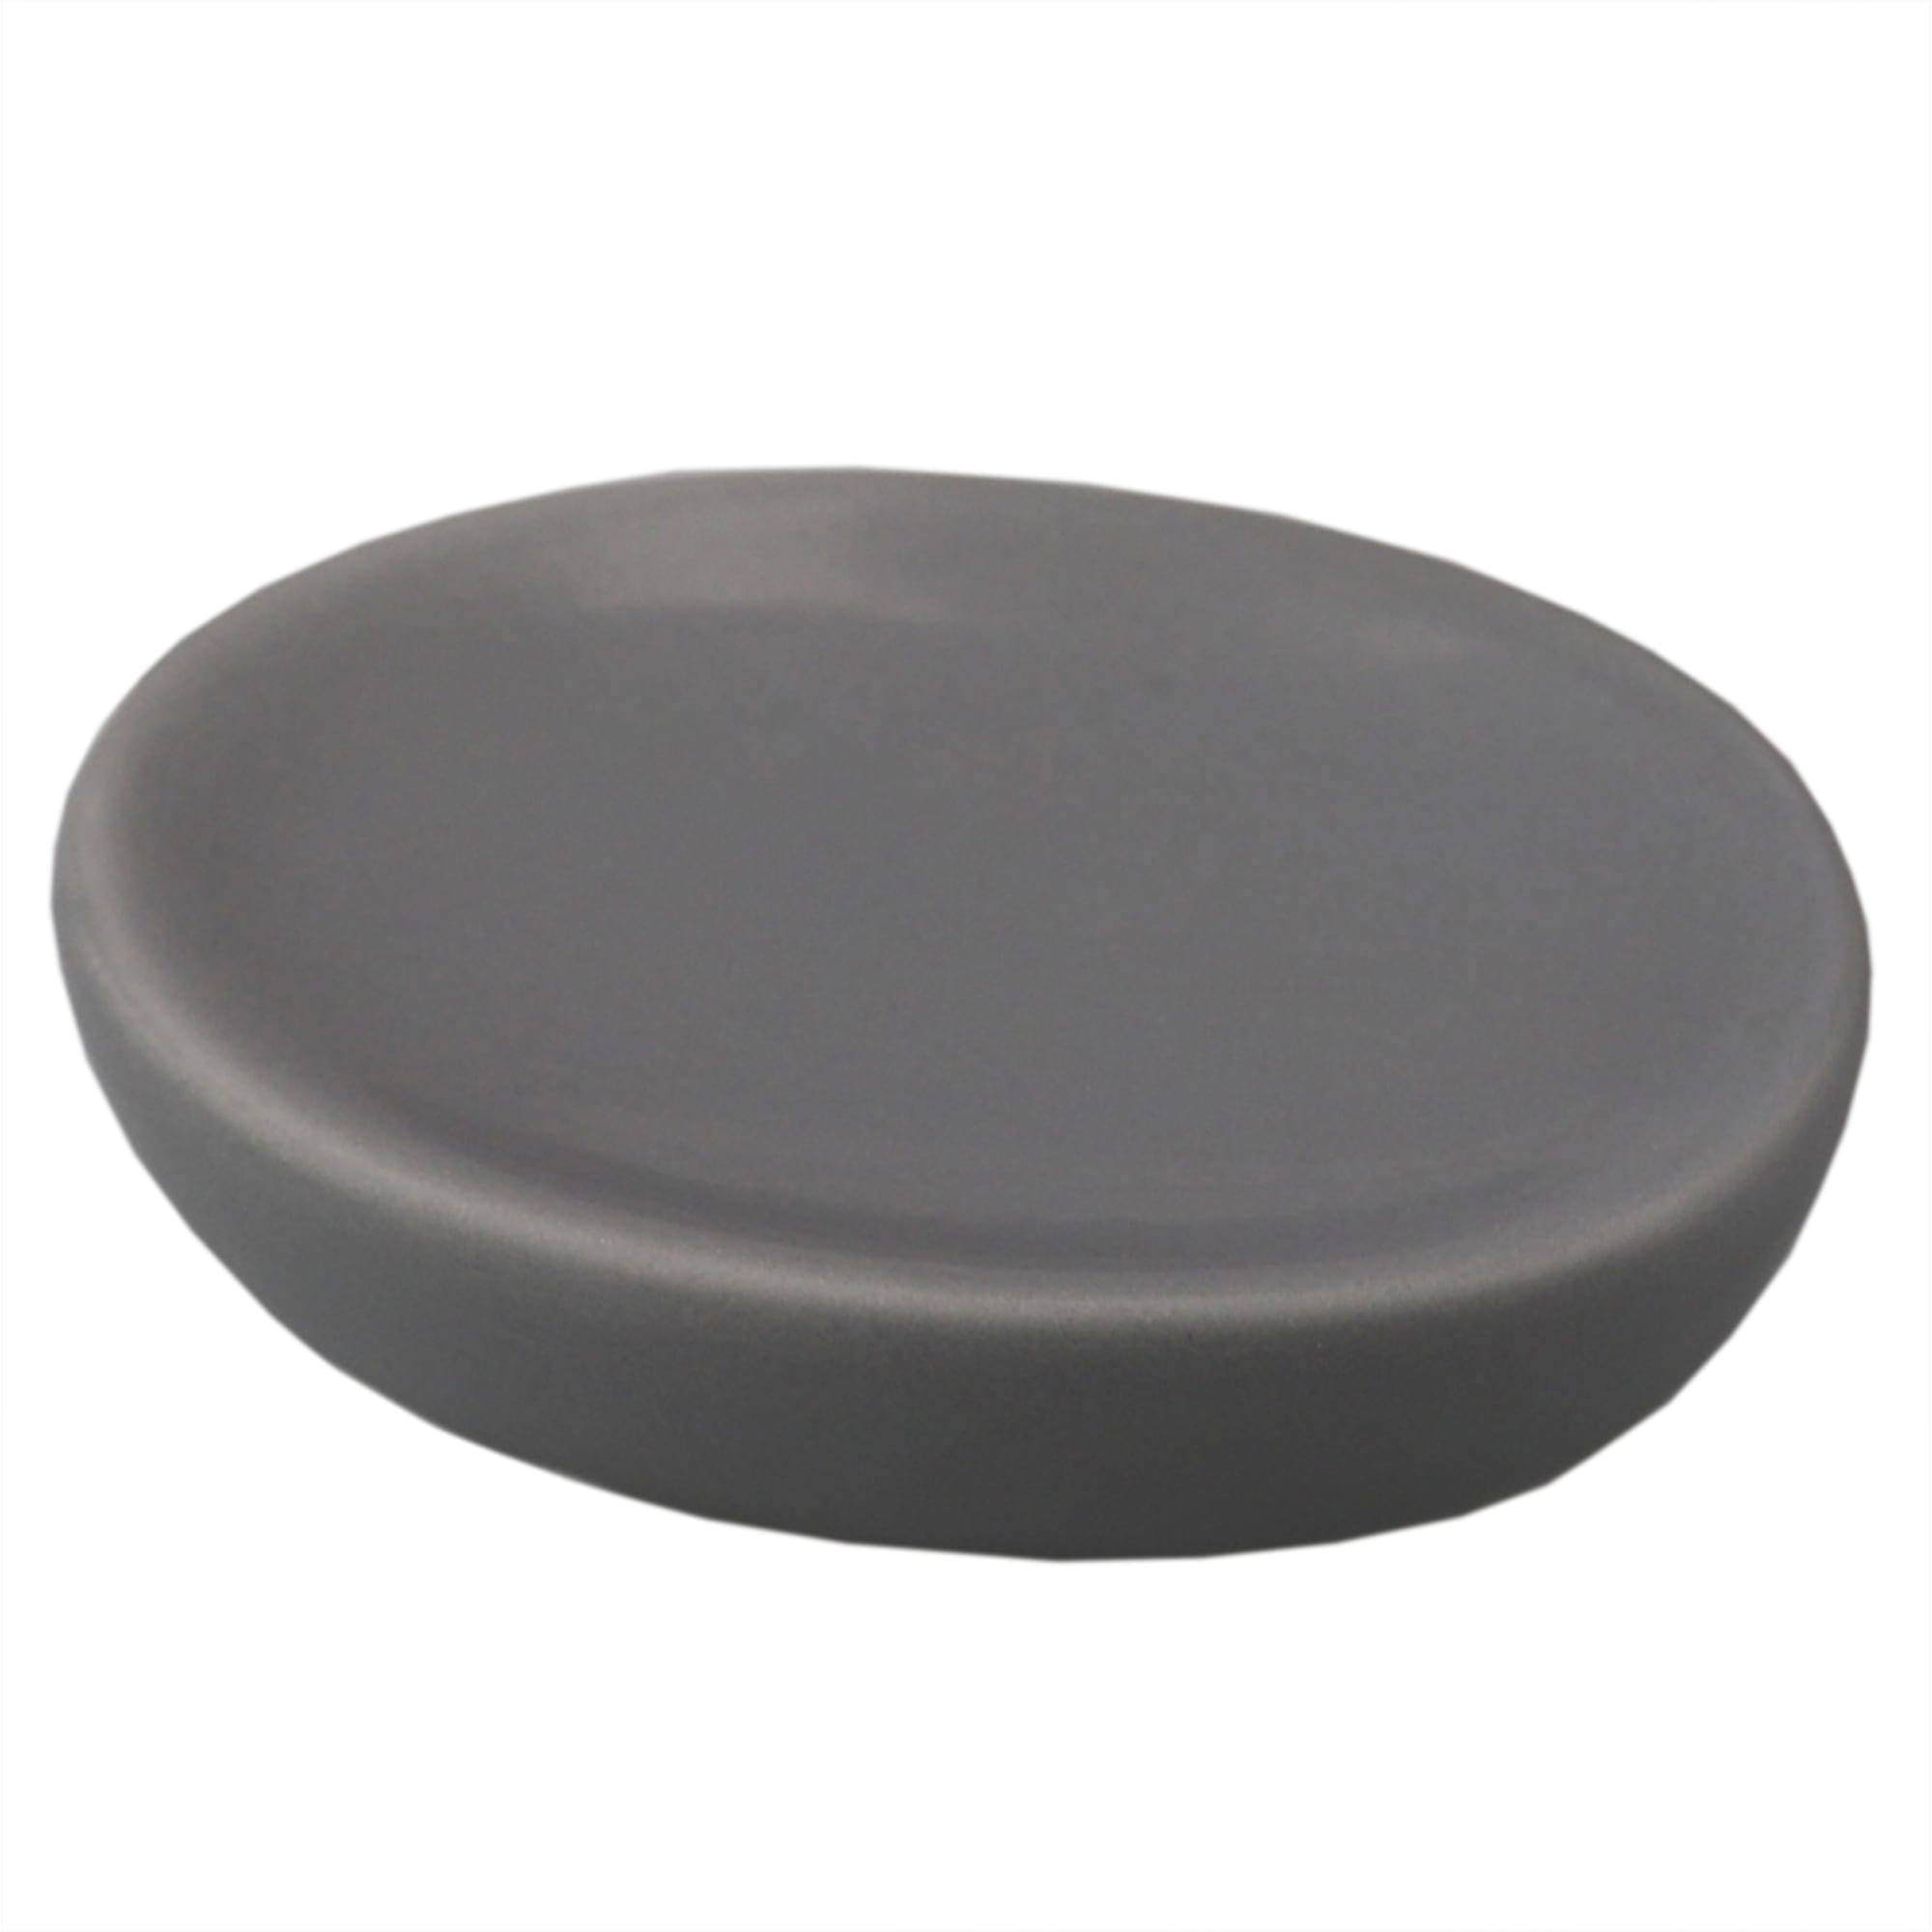 Home Basics Luxem 4 Piece Ceramic Bath Accessory Set, Grey $10.00 EACH, CASE PACK OF 12